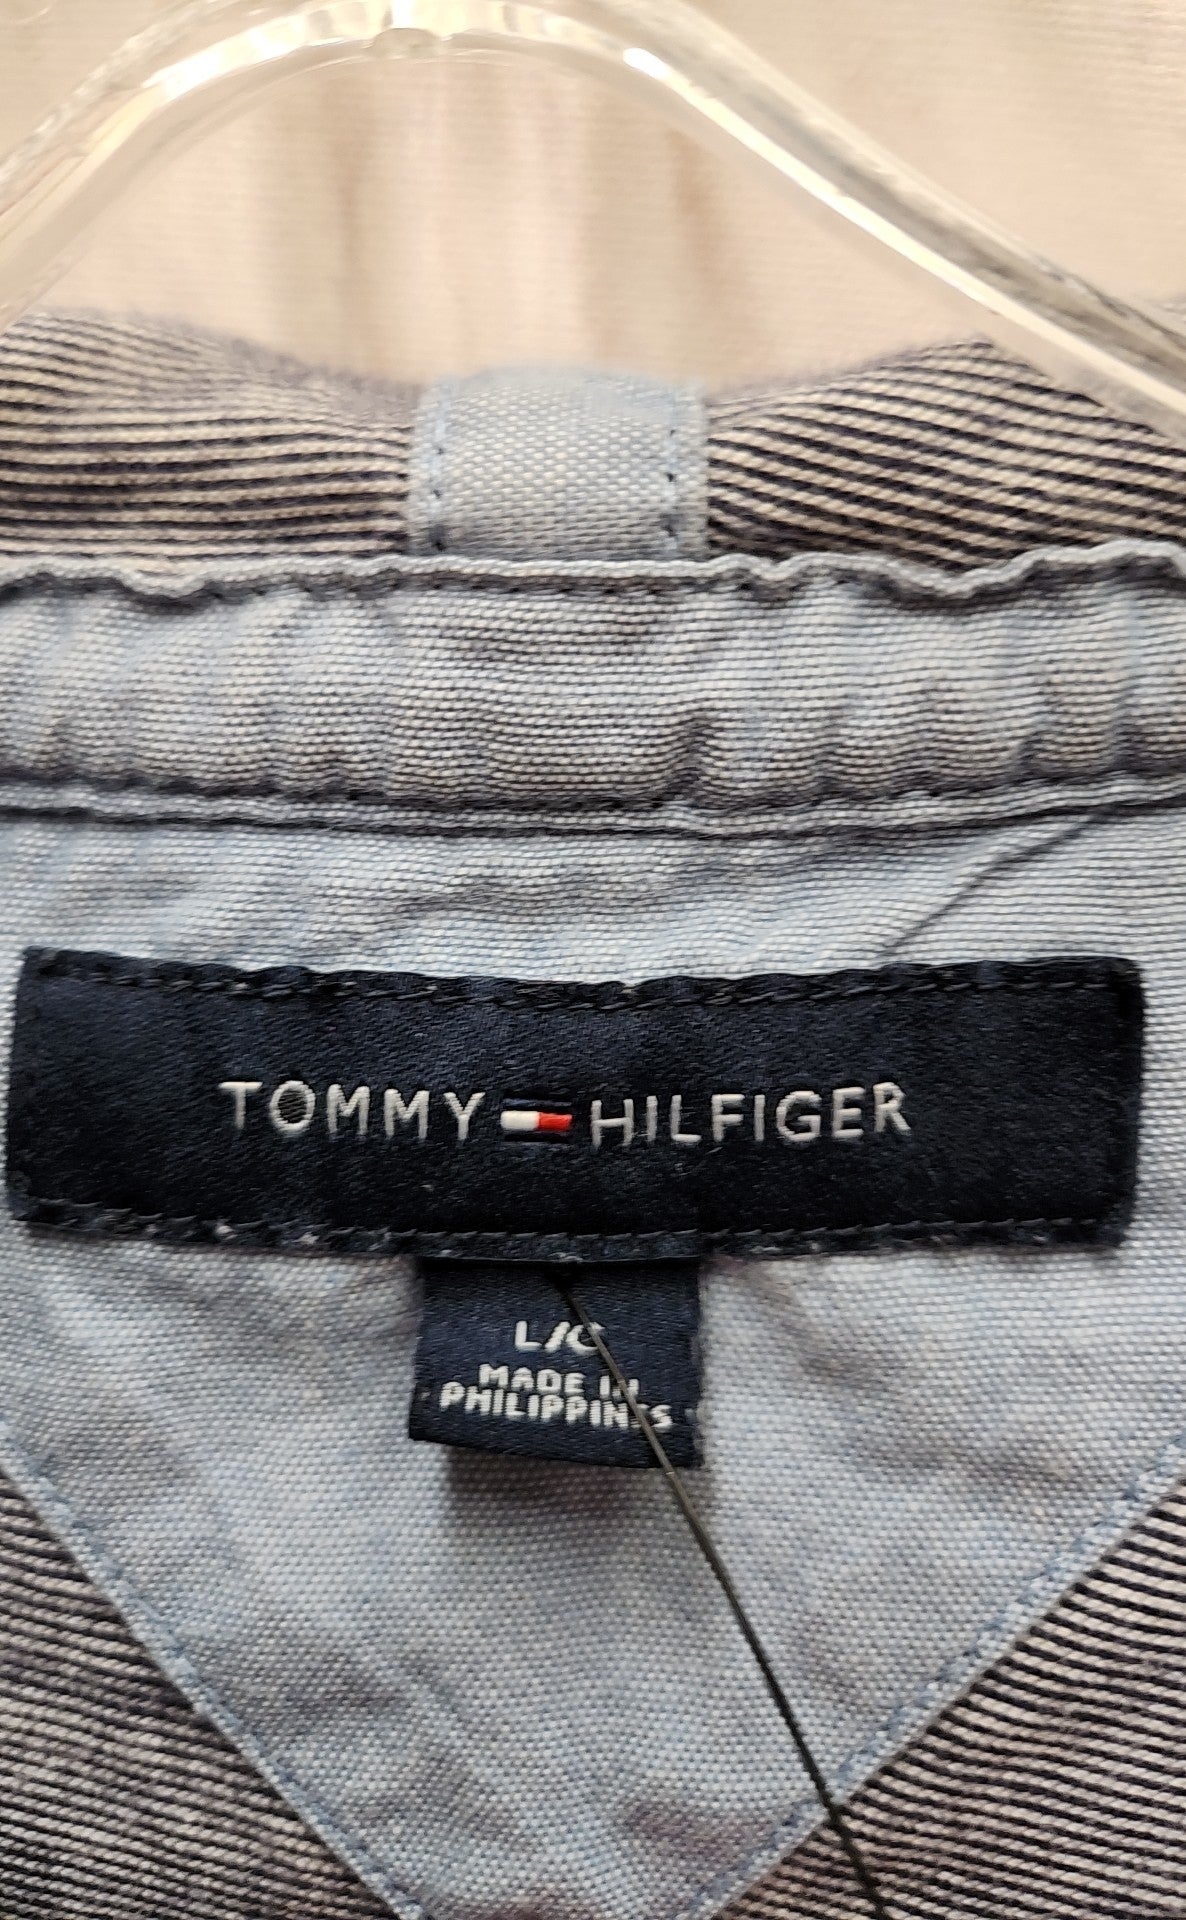 Tommy Hilfiger Men's Size L Blue Shirt